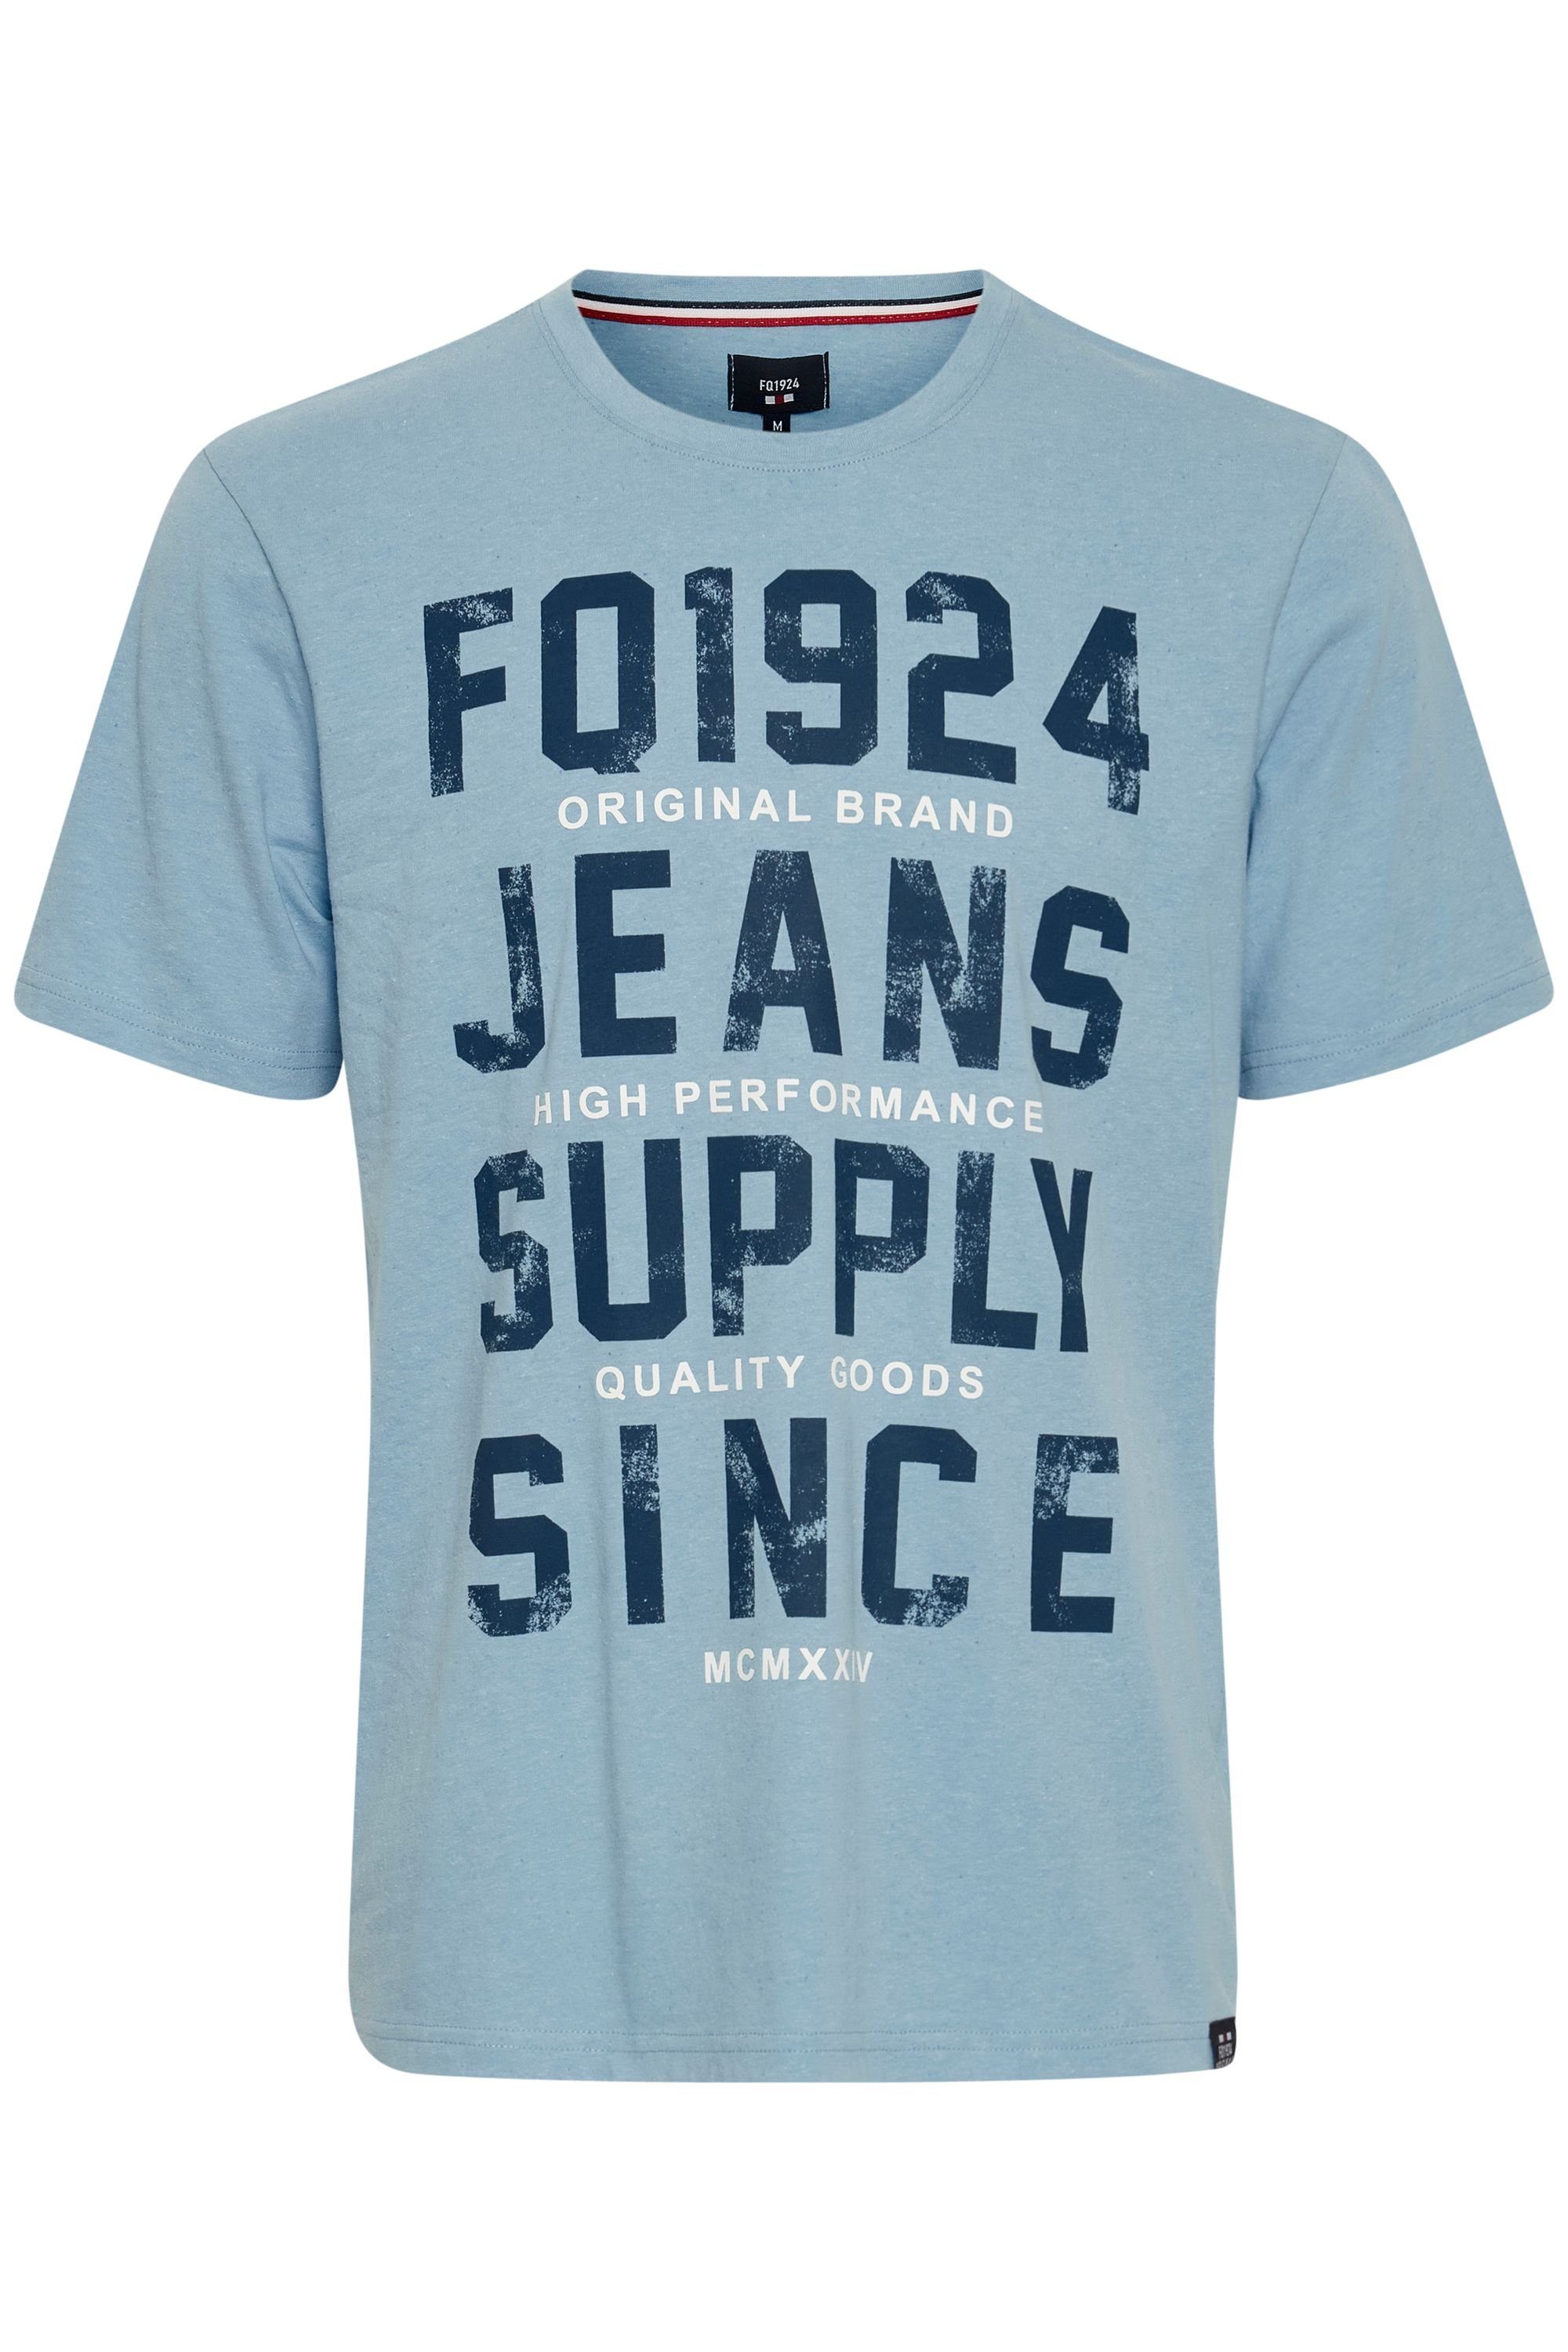 FQ1924 T-Shirt Melange FQ1924 Powder FQNOX Blue